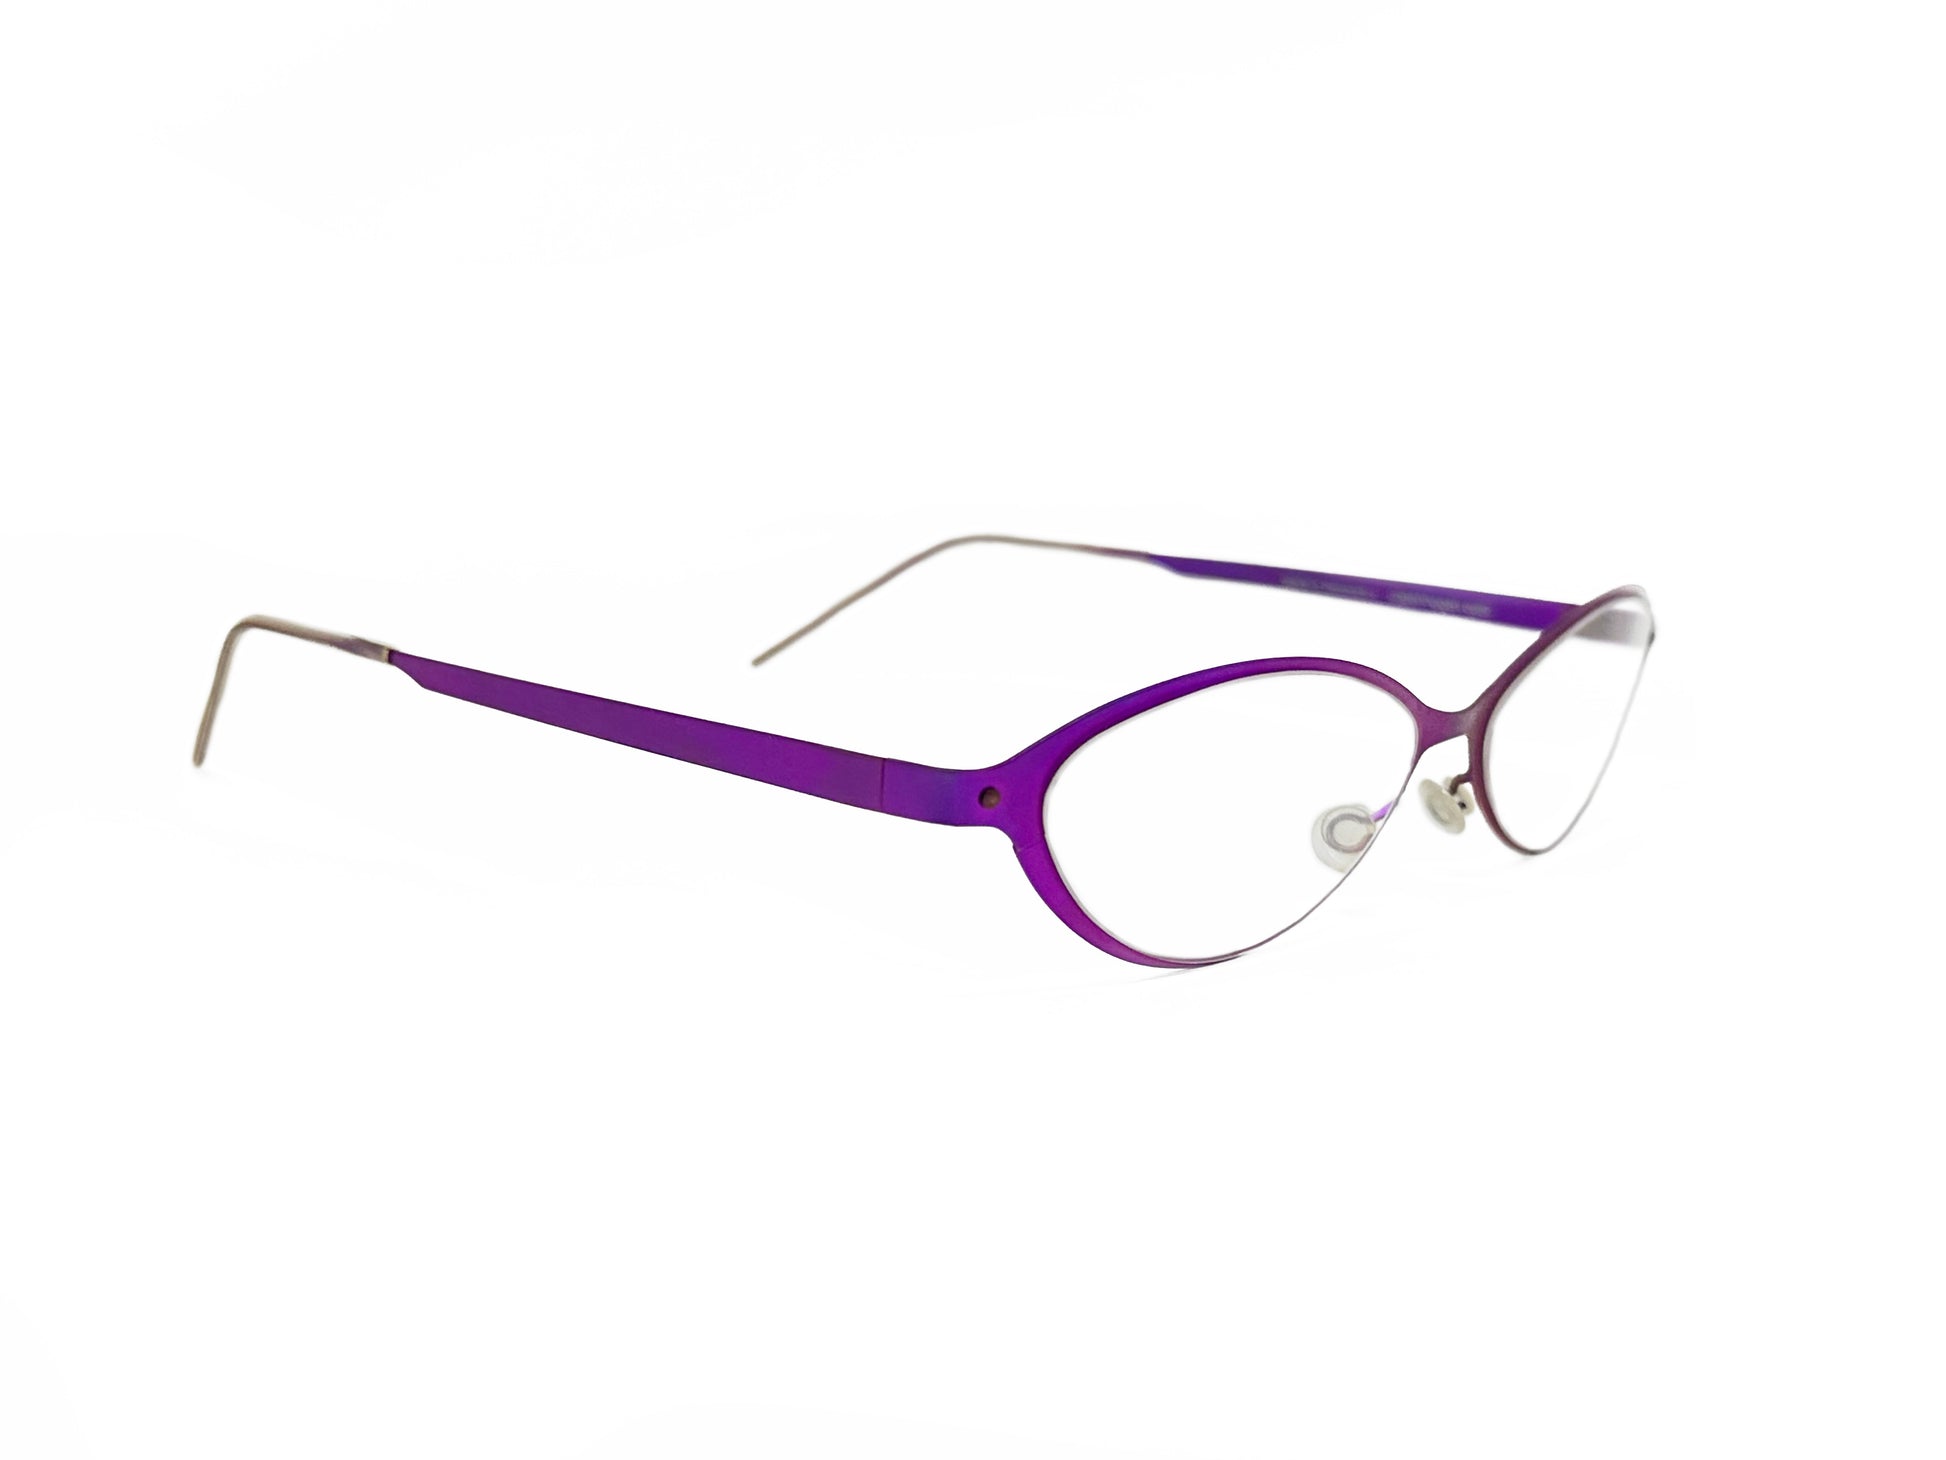 Copenhagen Eyes angled-oval, metal, optical frames. Model: It's Total. Color: 57 - purples. Side view.